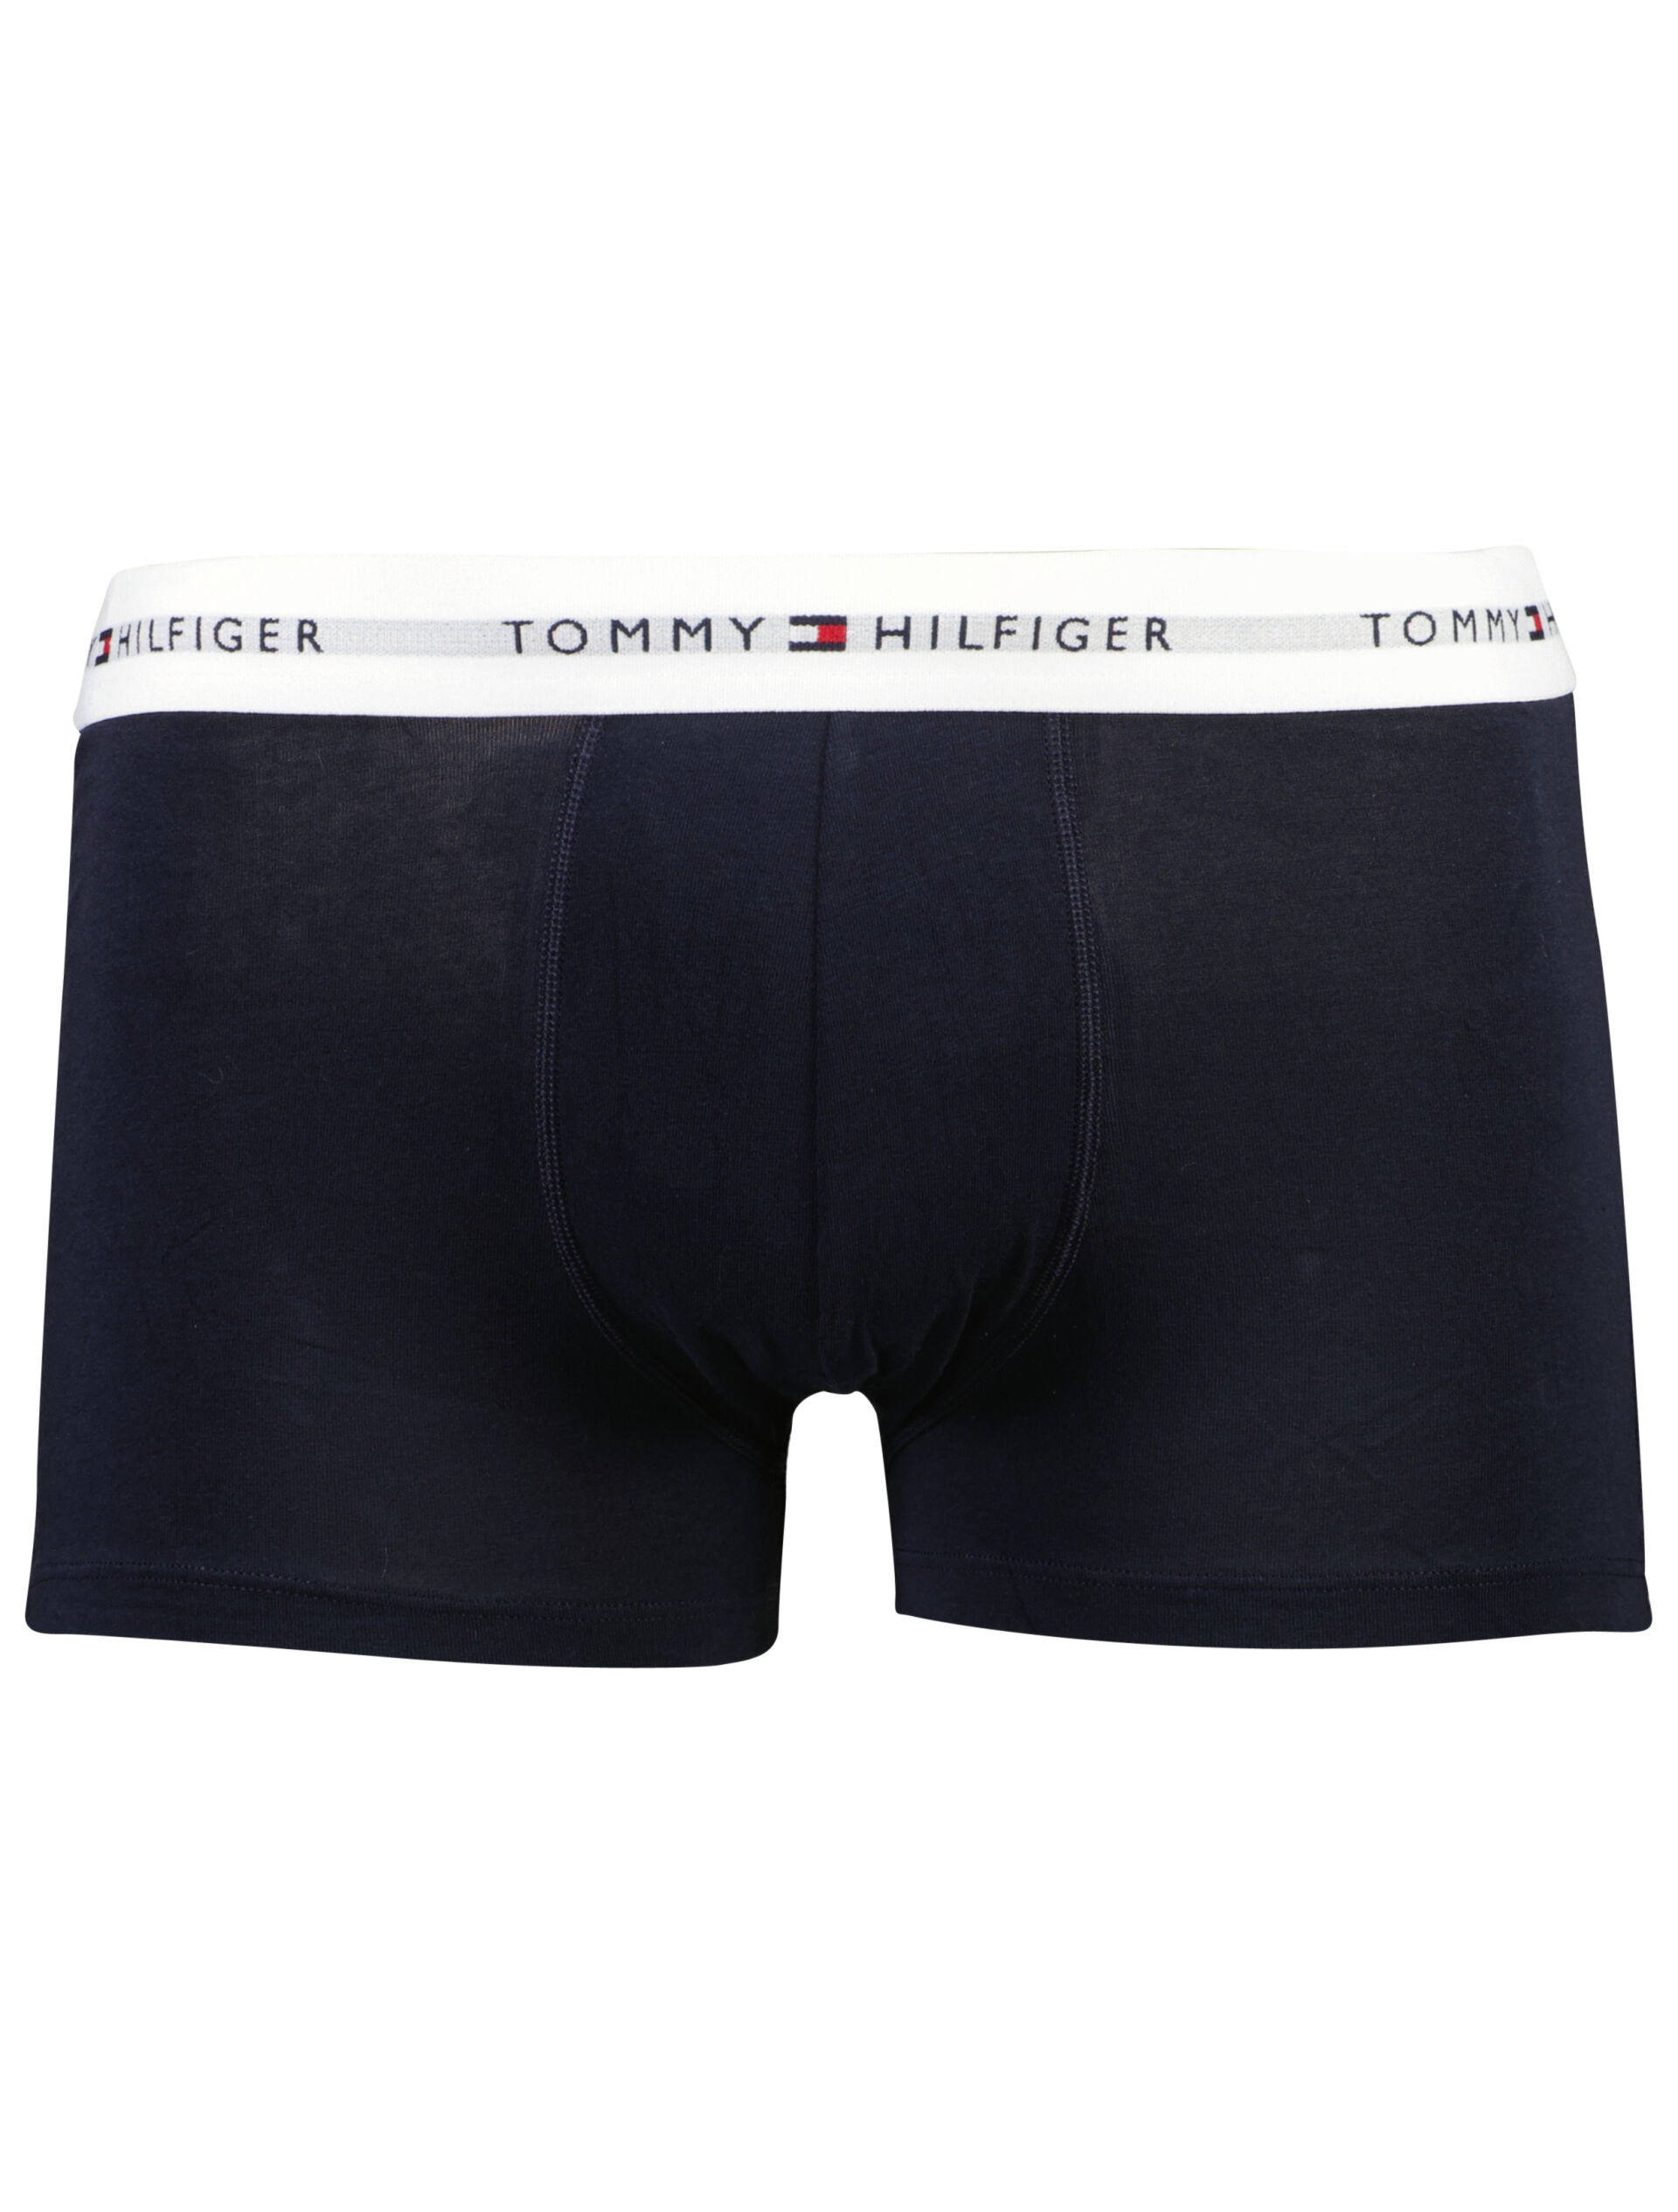 Tommy Hilfiger  Tights 90-900862